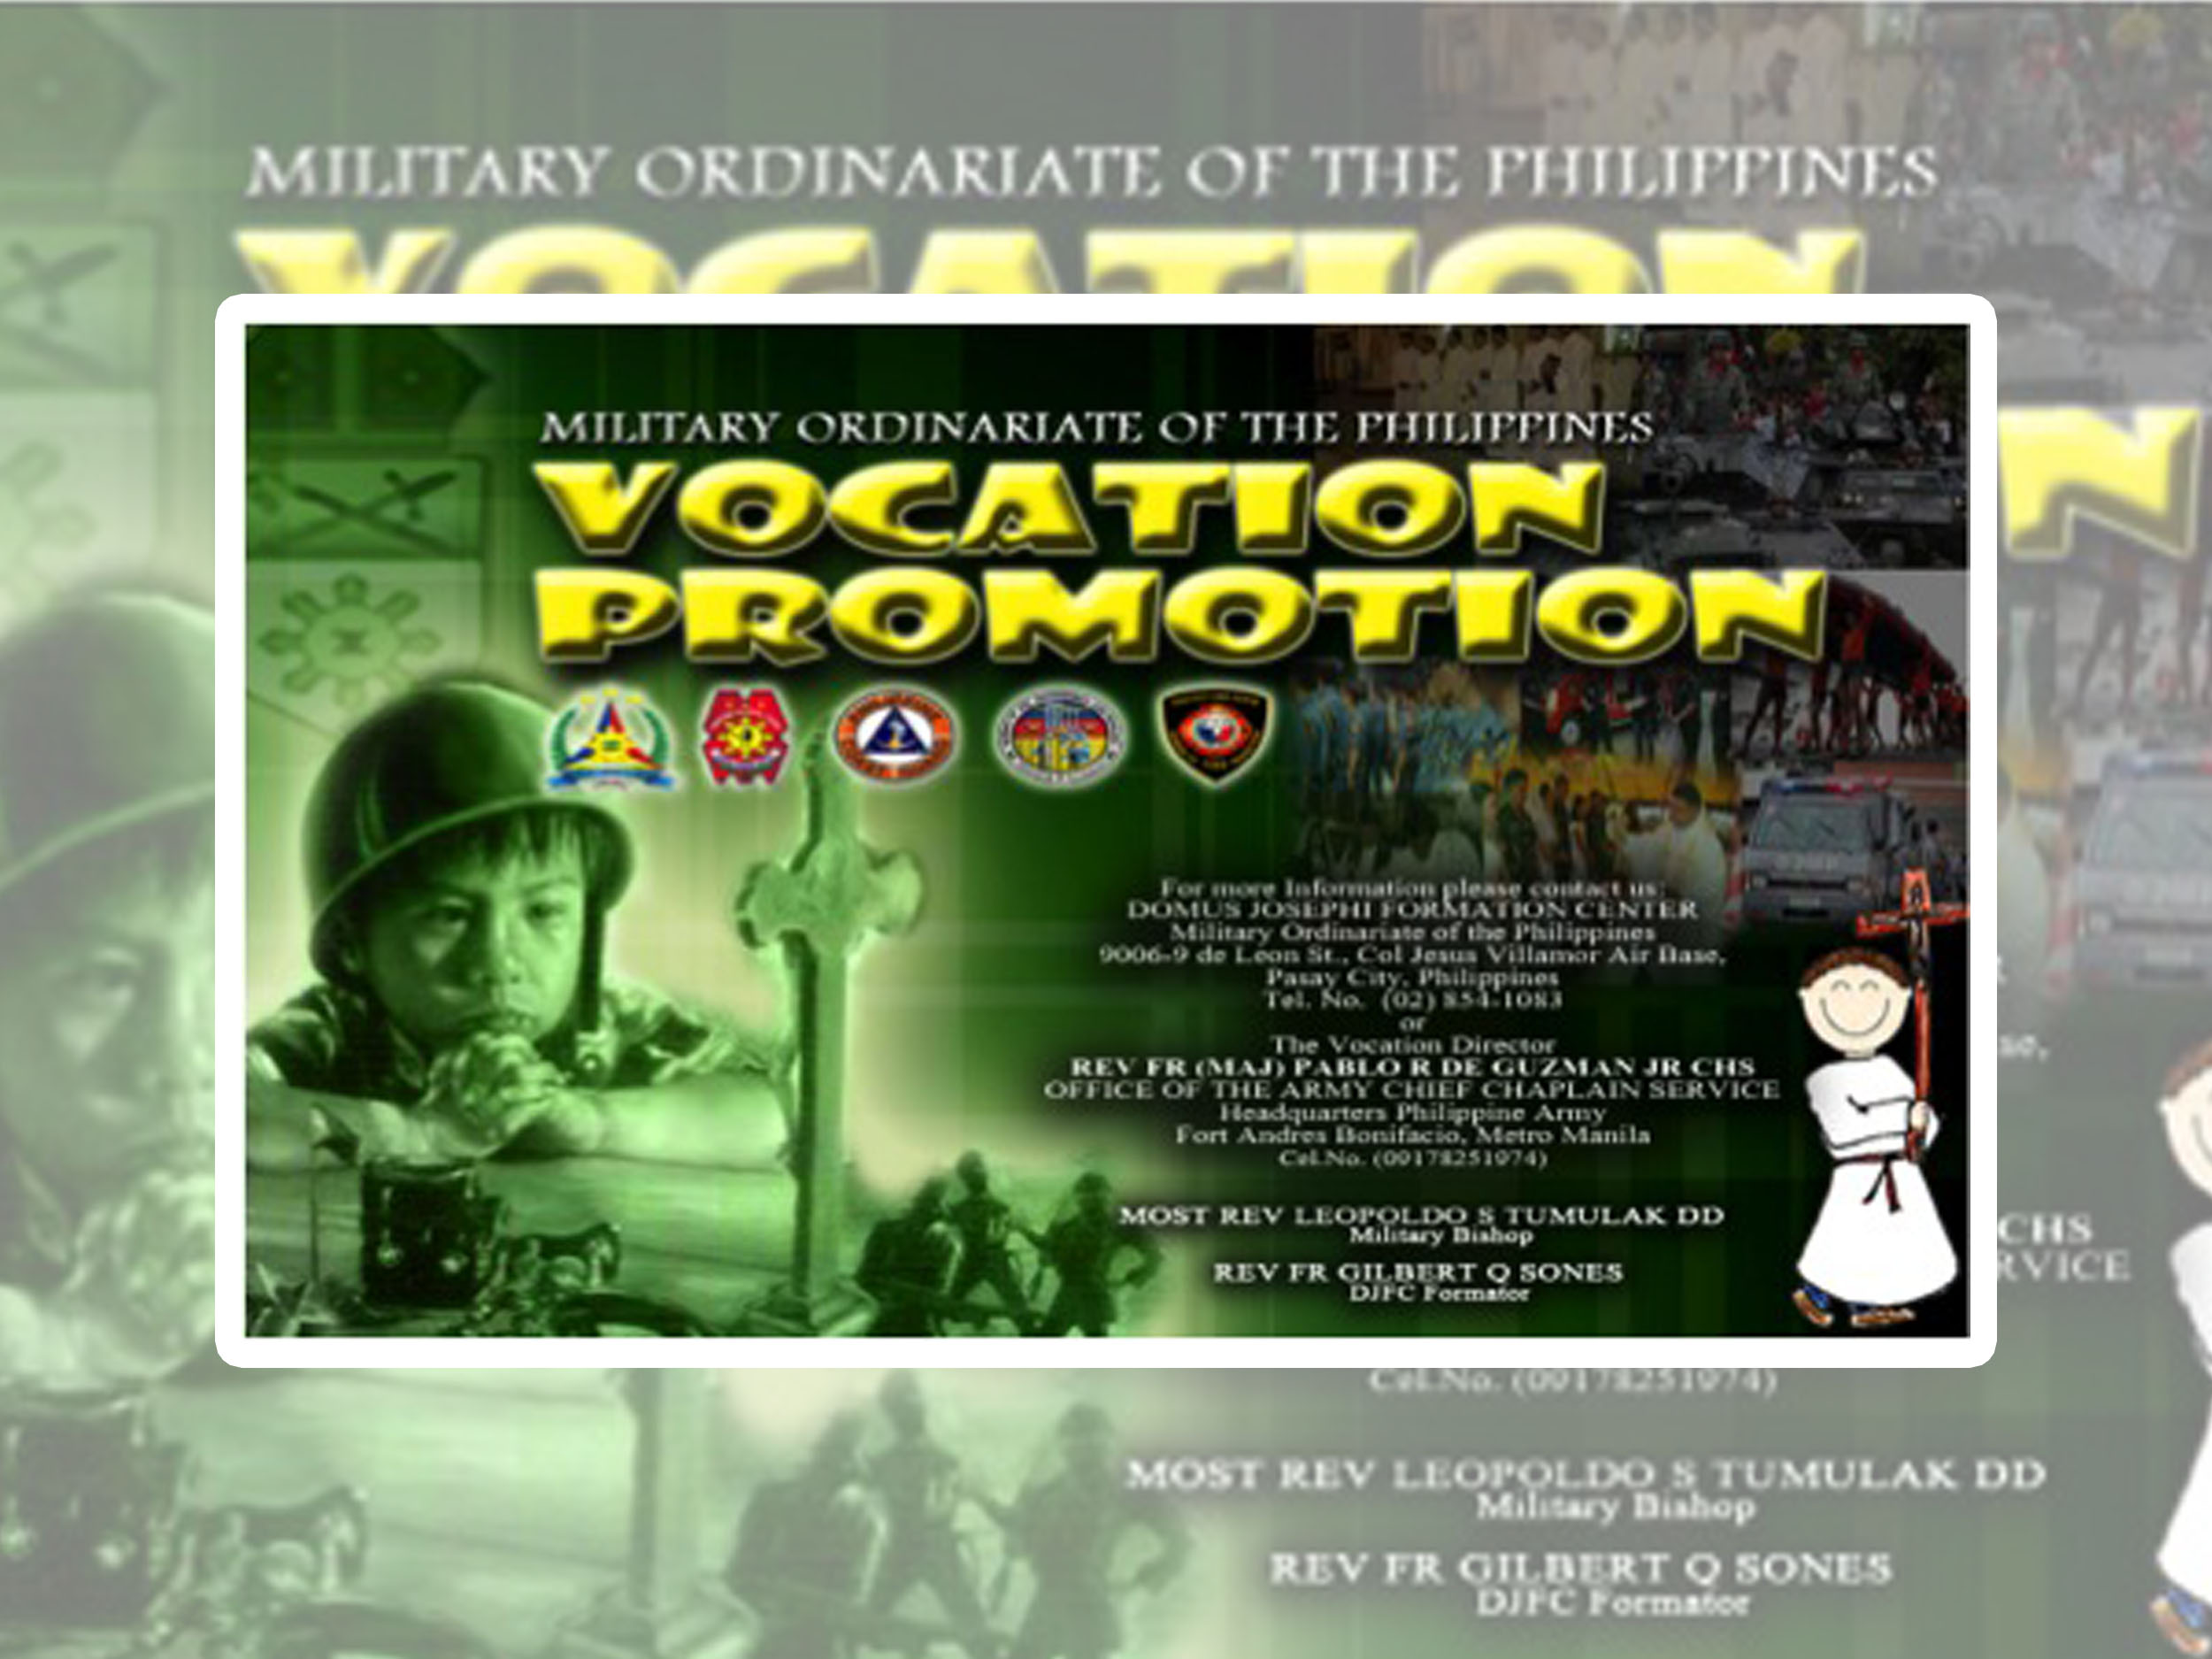 Military Chaplaincy